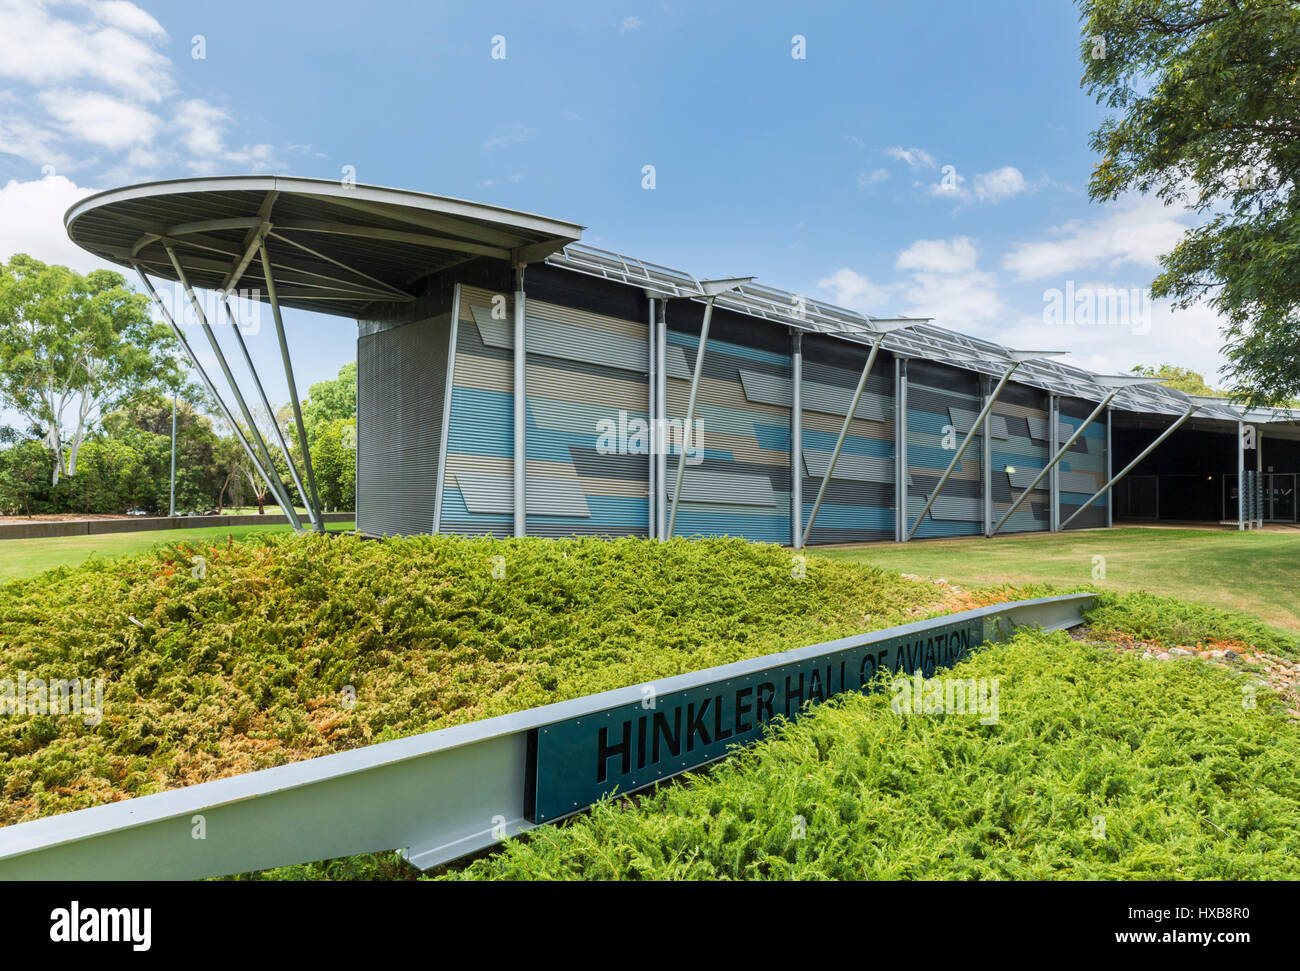 The Hinkler Hall of Aviation located in the Bundaberg Botanic Gardens.  Bundaberg, Queensland, Australia Stock Photo